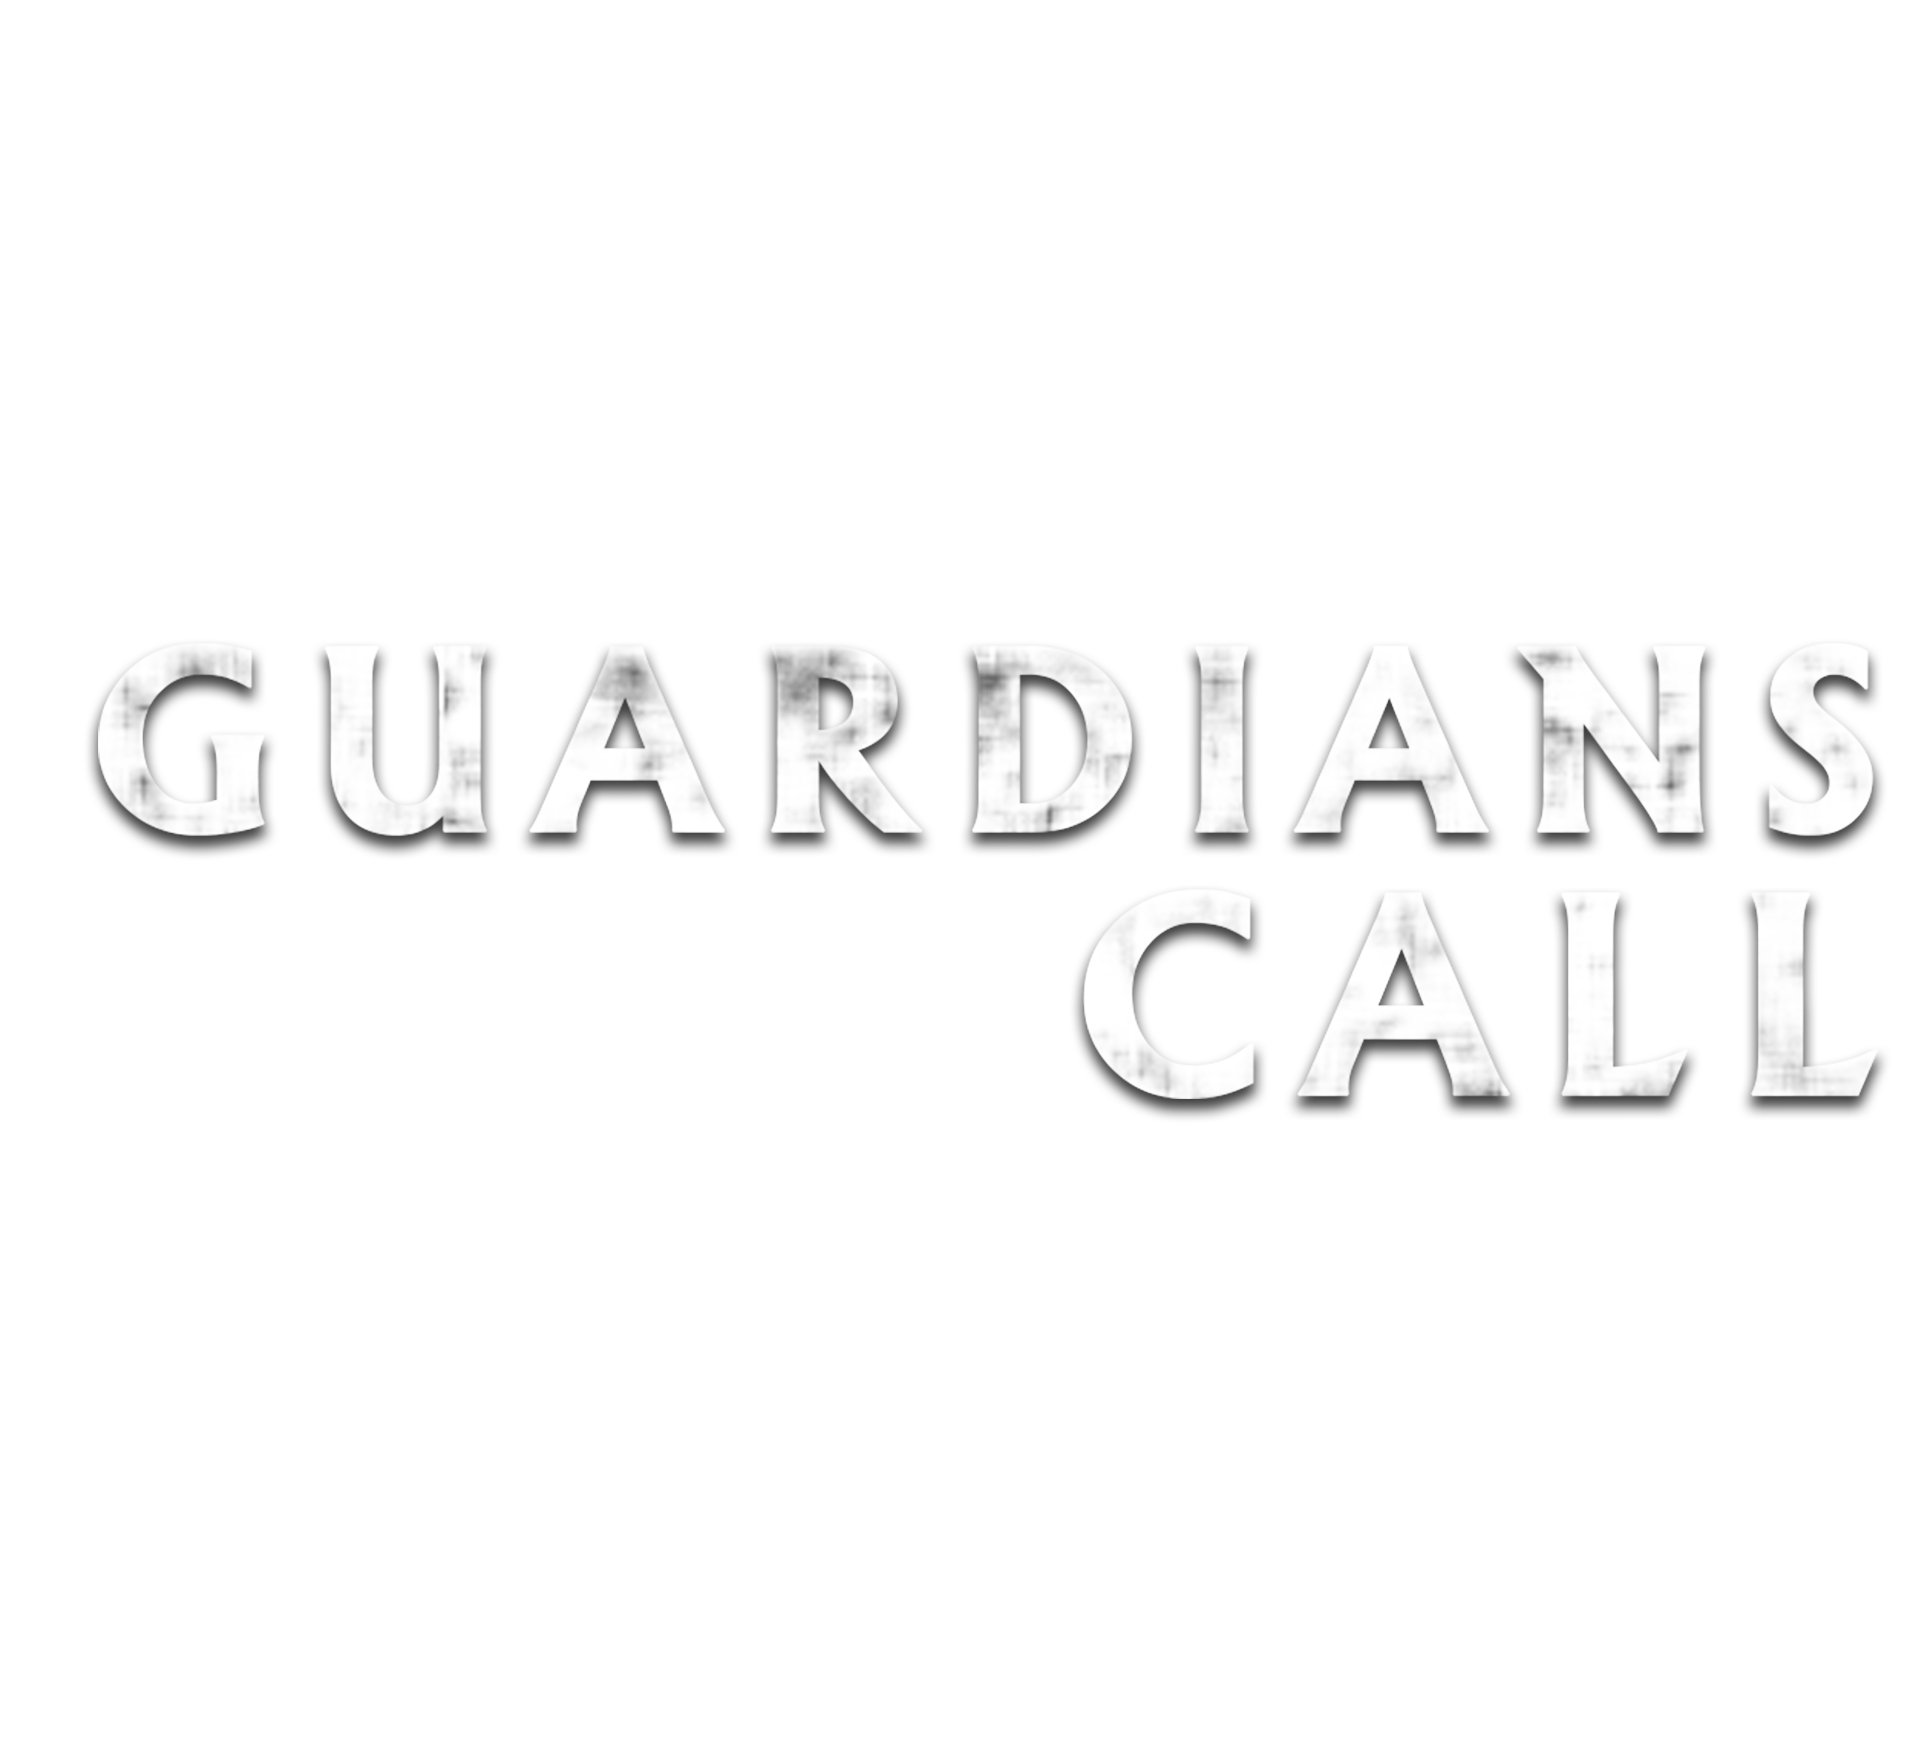 GUARDIANS CALL